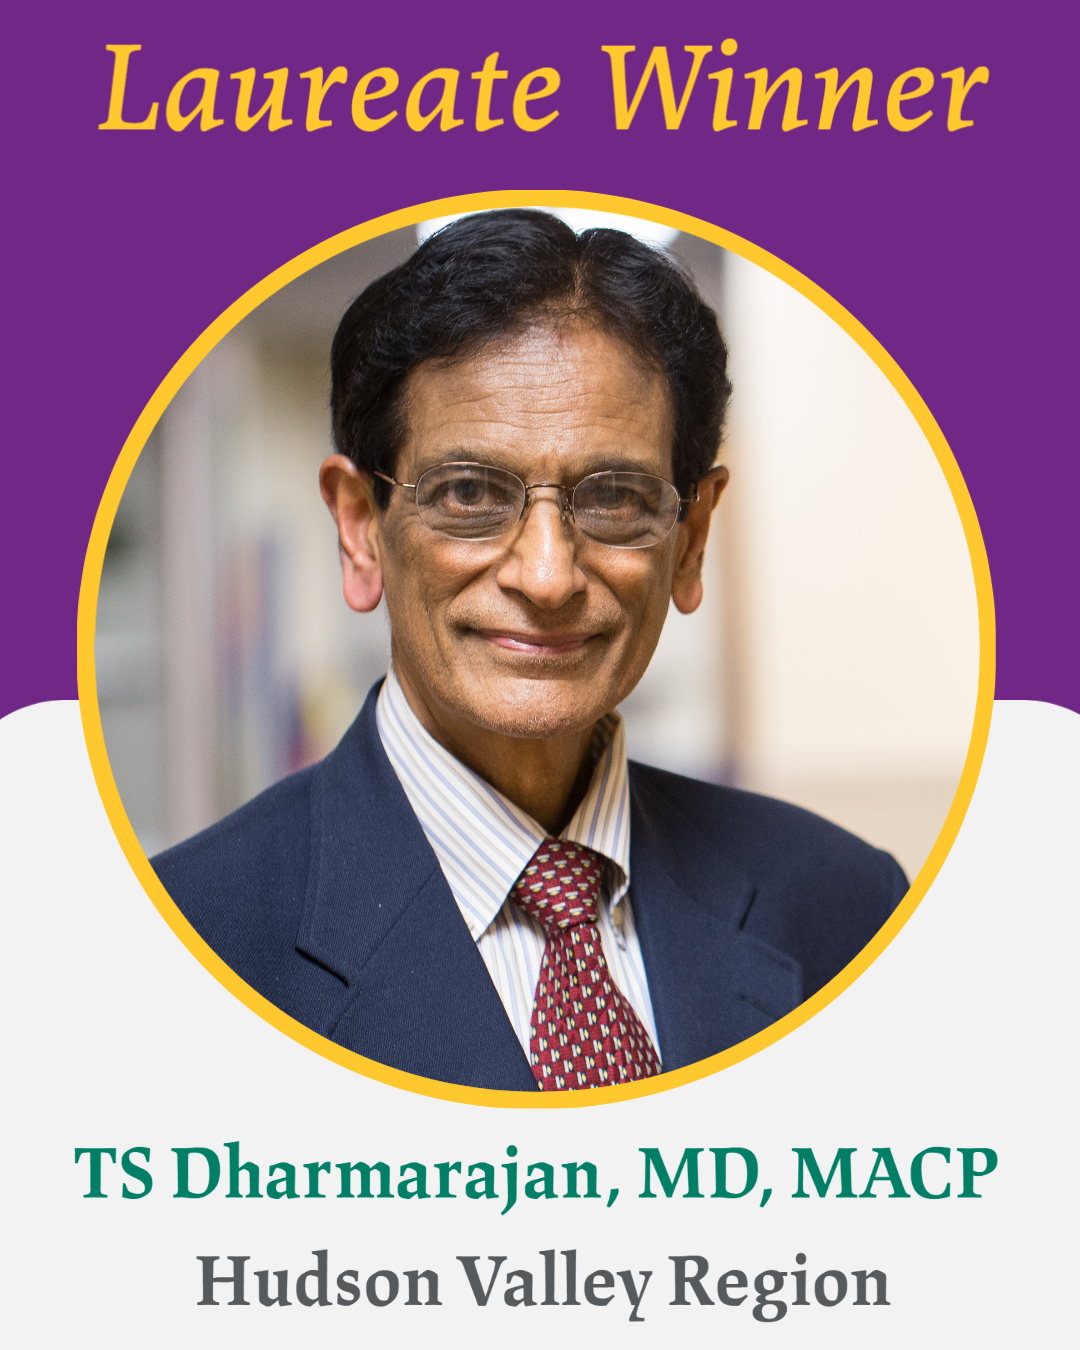 Dr. TS Dharmarajan